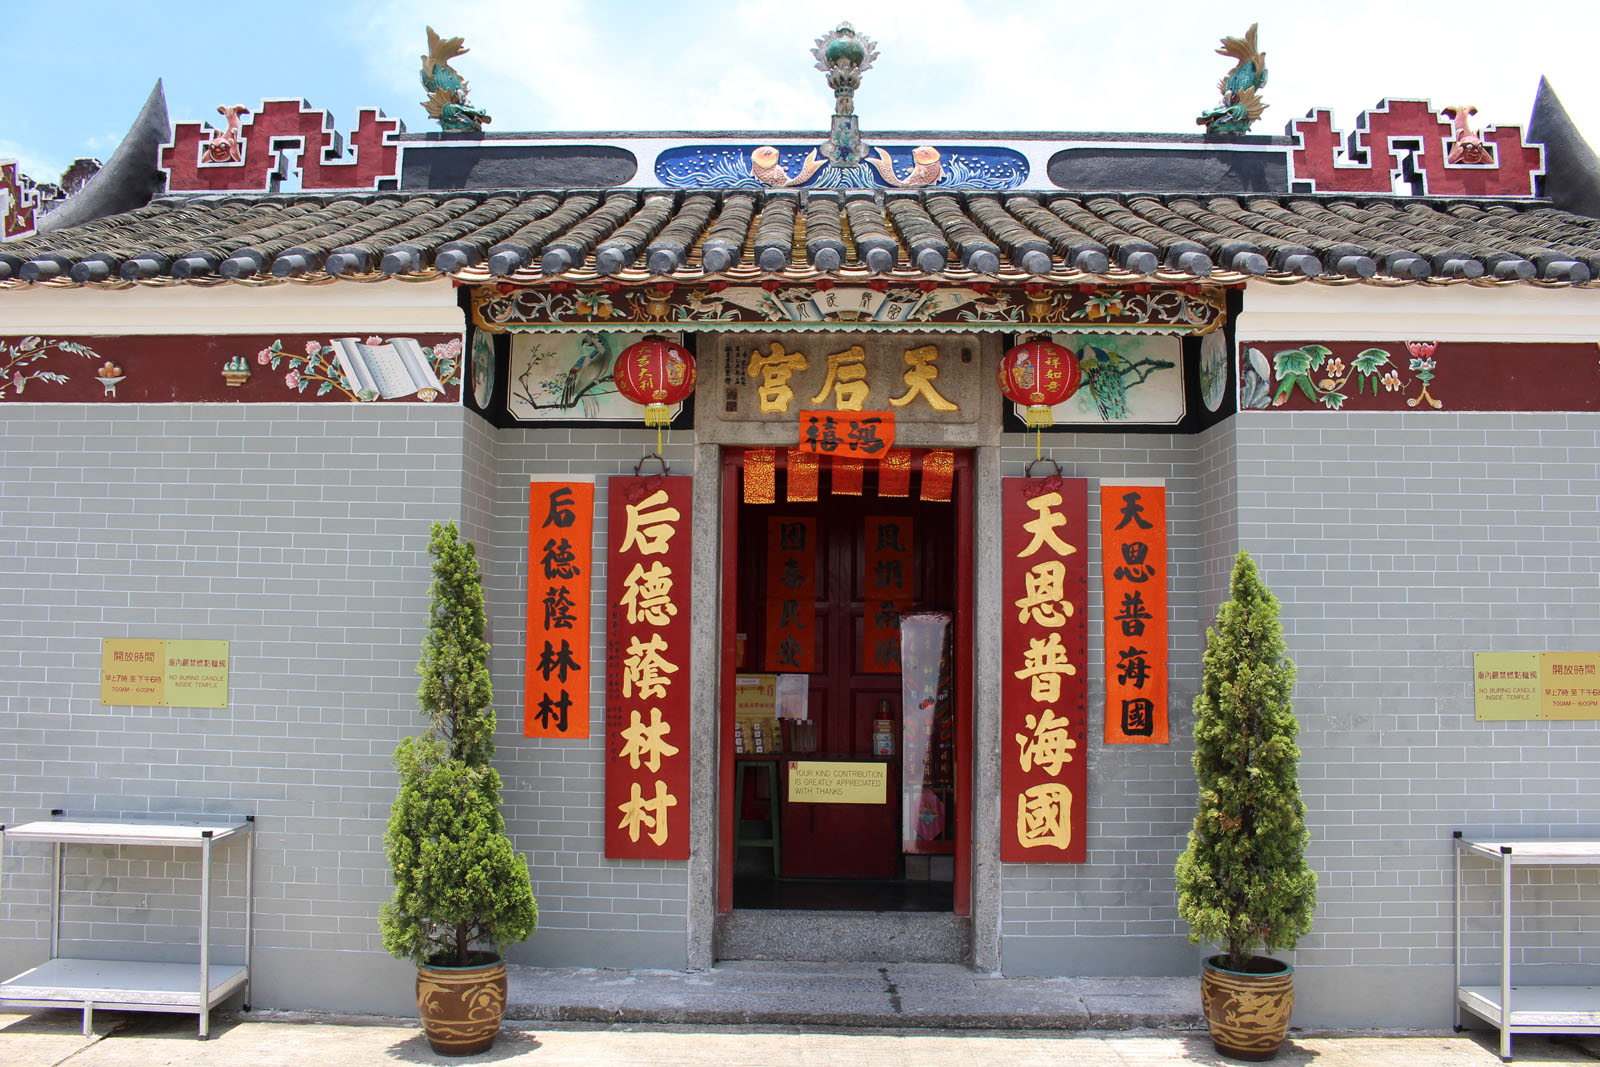 Photo 3: Lam Tsuen Tin Hau Temple